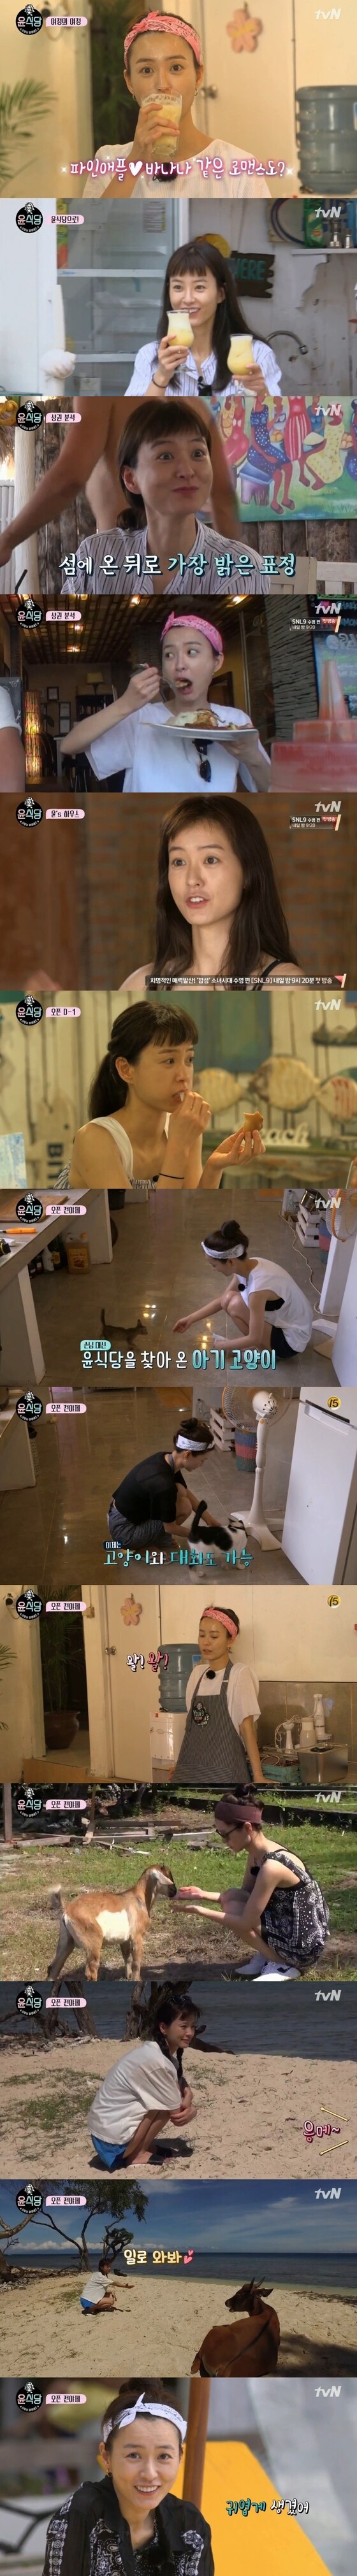 tvN '윤식당' 캡처 © News1